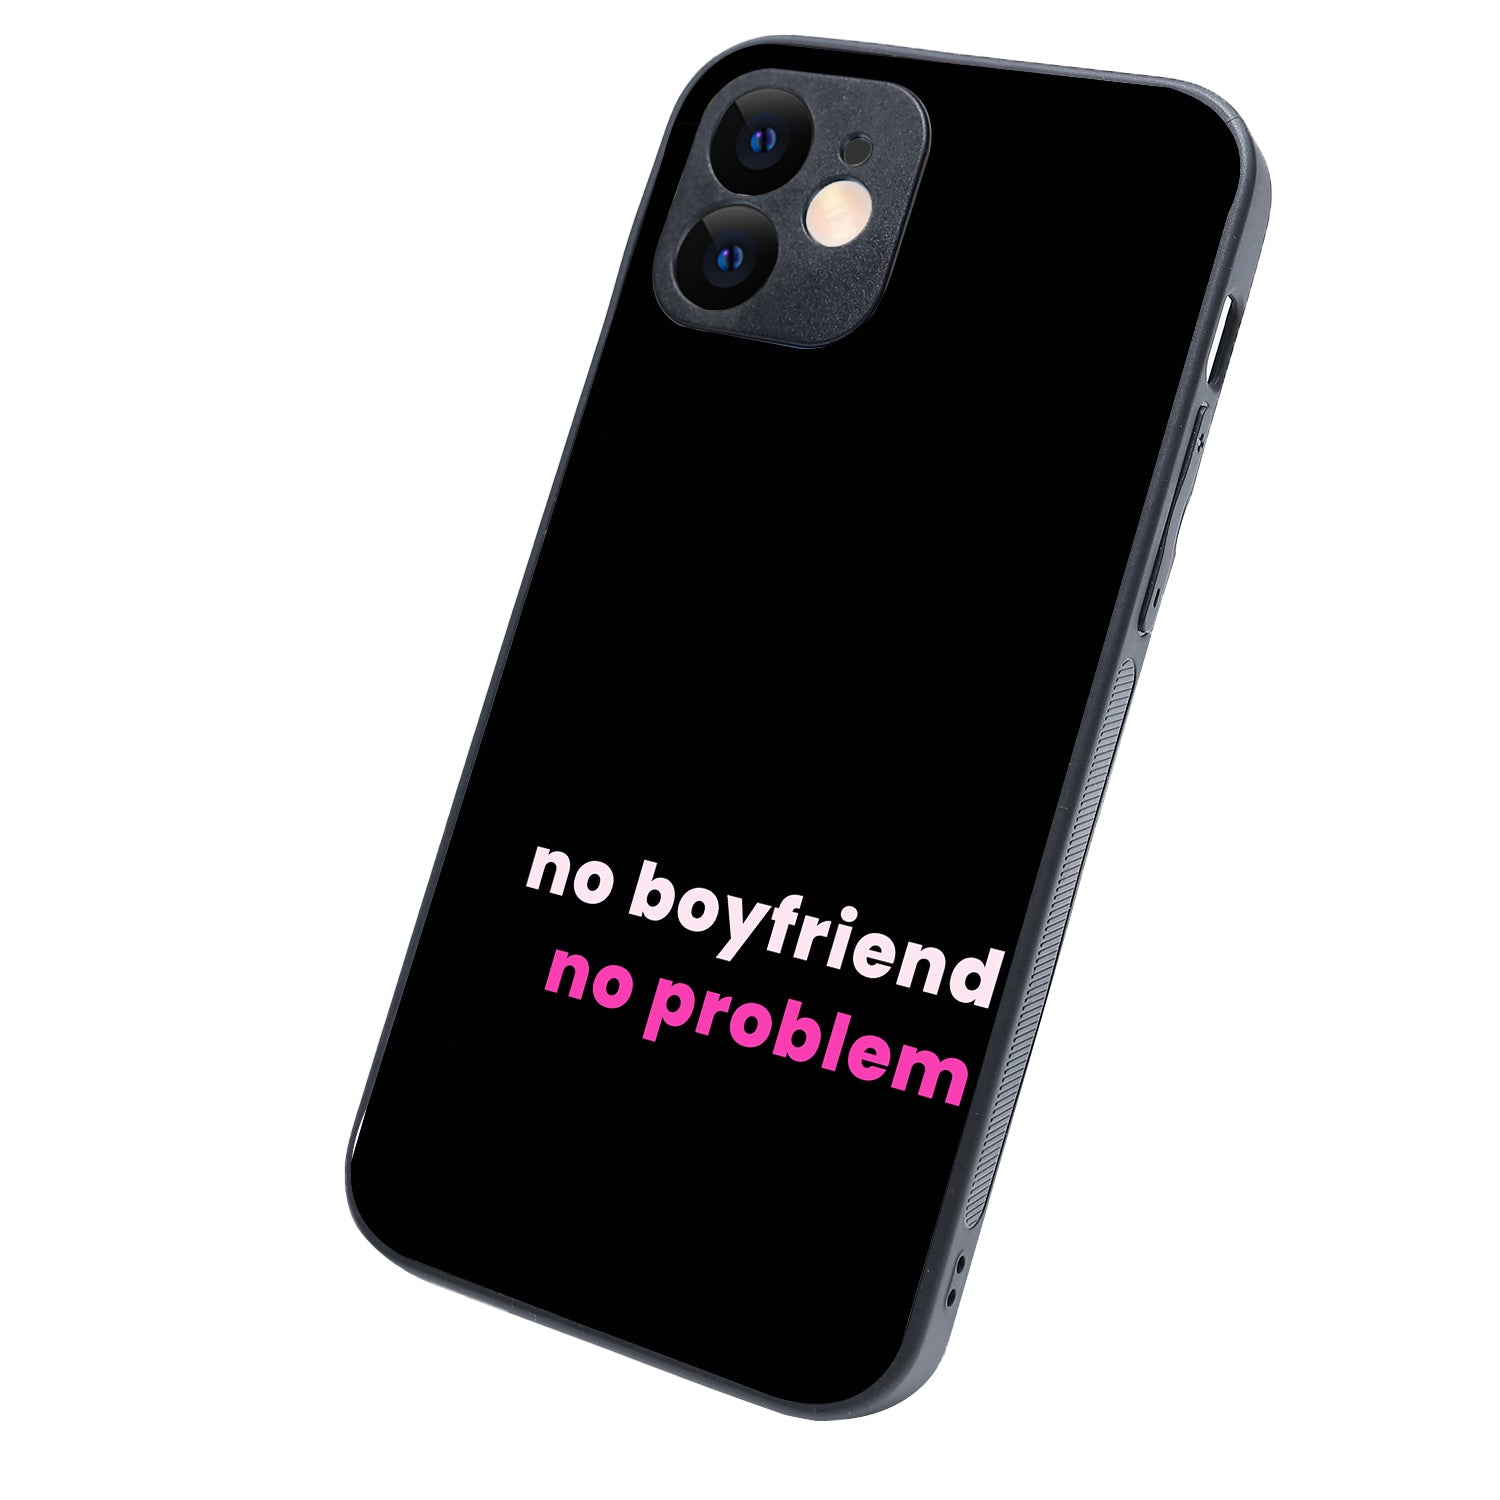 No Boyfriend Motivational Quotes iPhone 12 Case